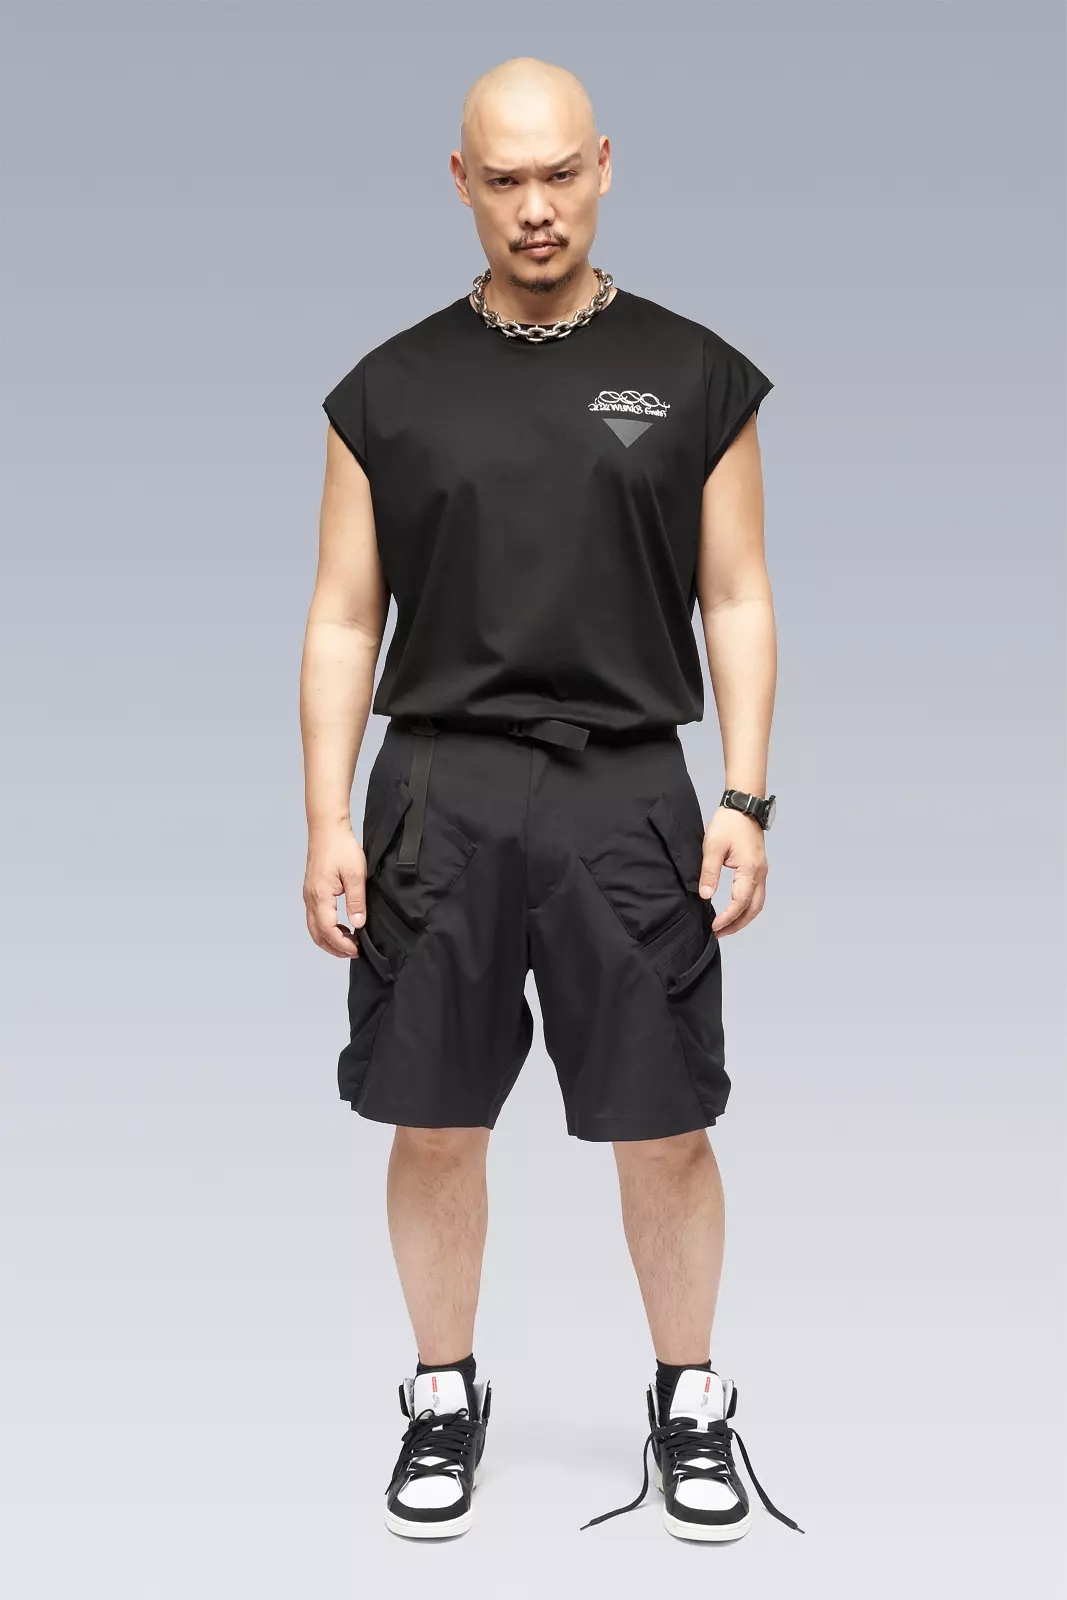 S25-PR-A 100% Cotton Mercerized Sleeveless T-shirt Black - 1